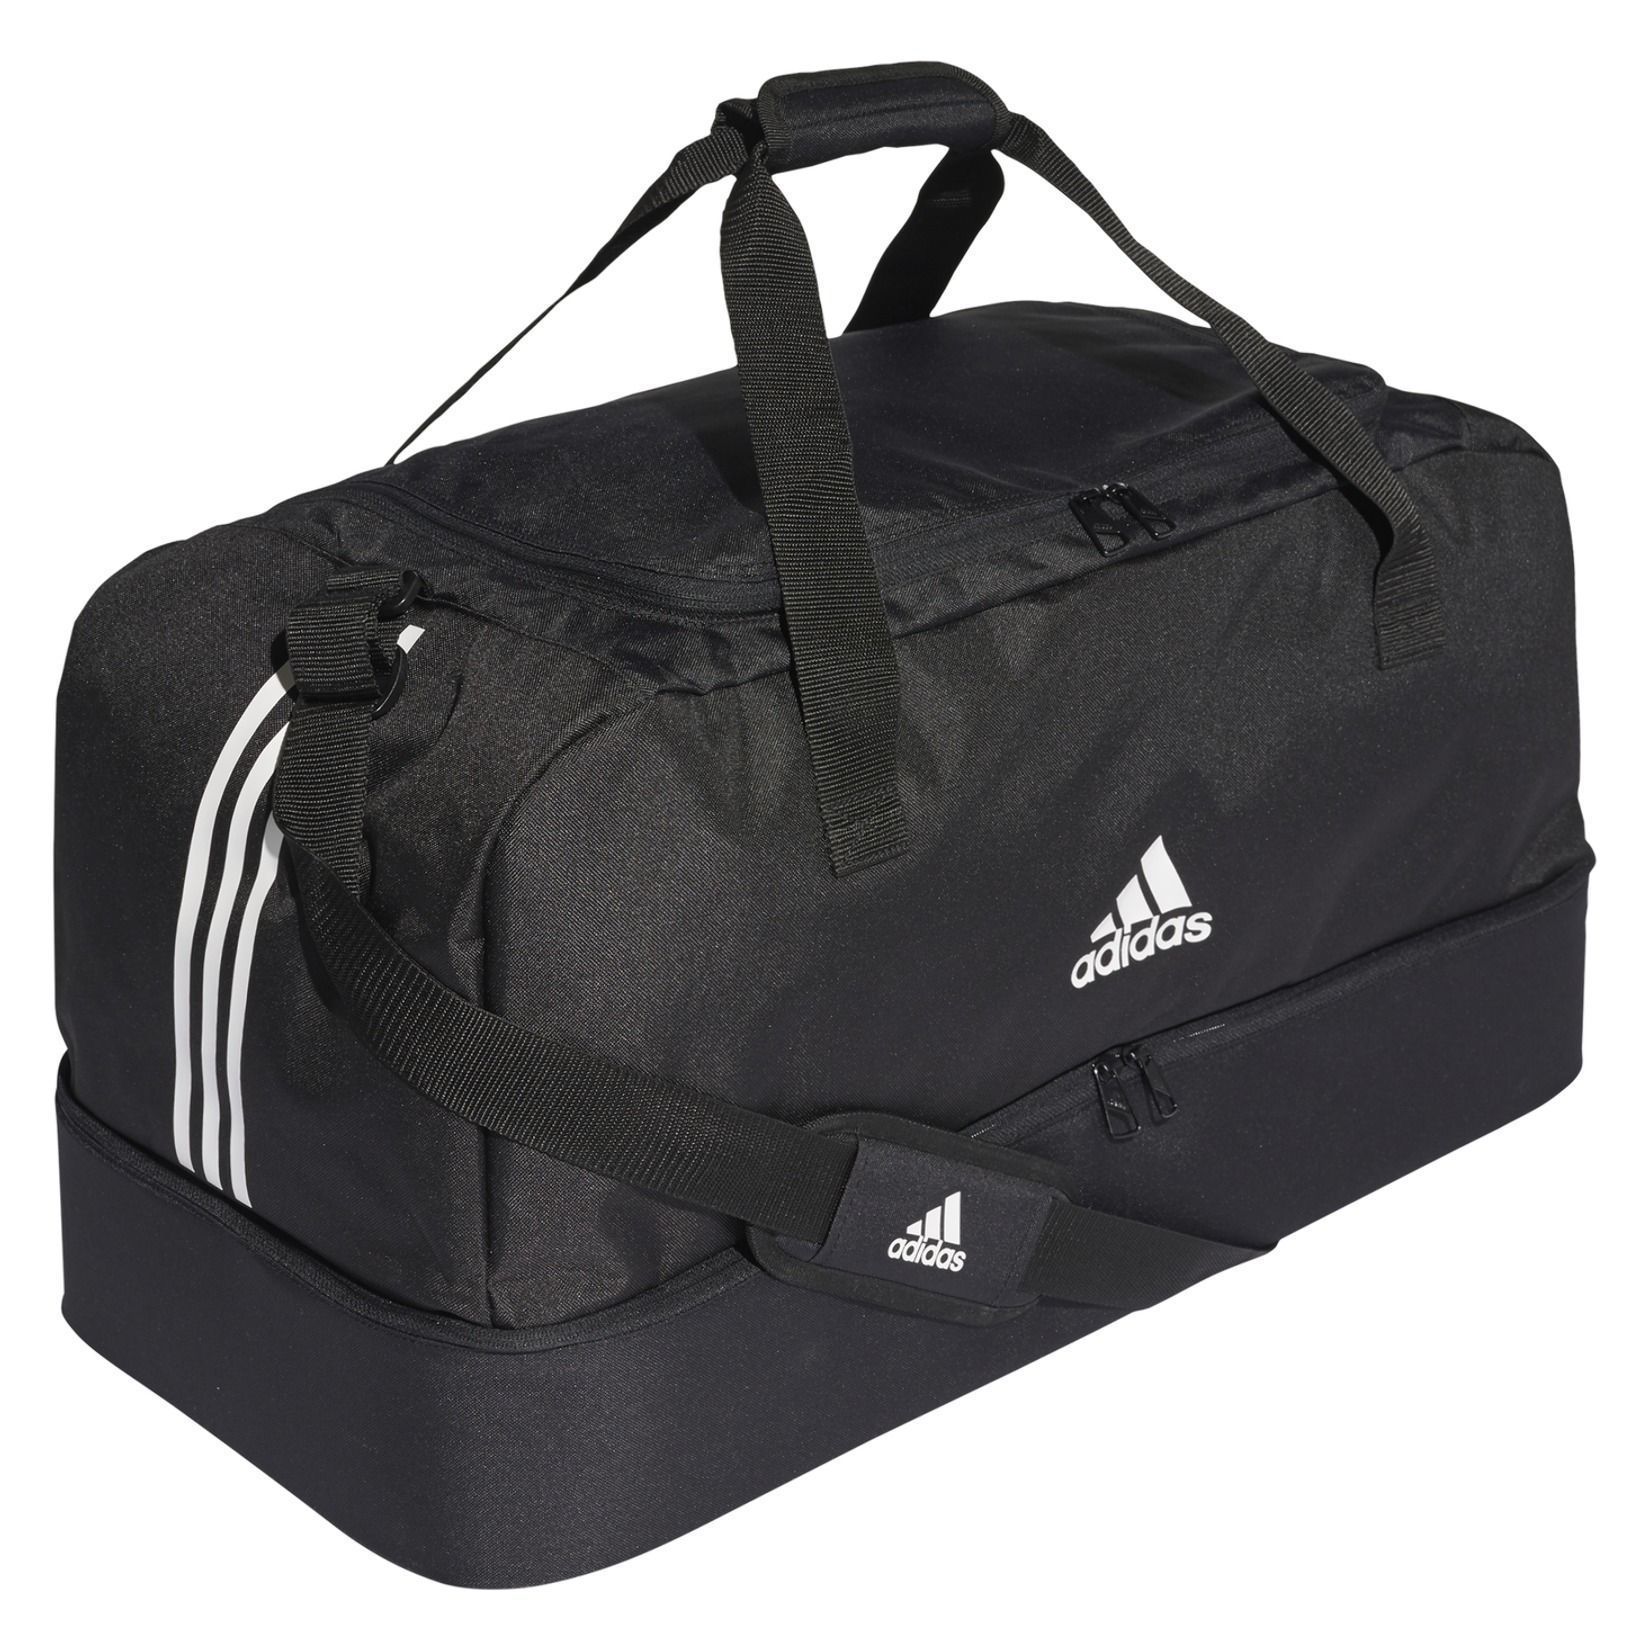 adidas Bottom Compartment Bag - Large - Kitlocker.com